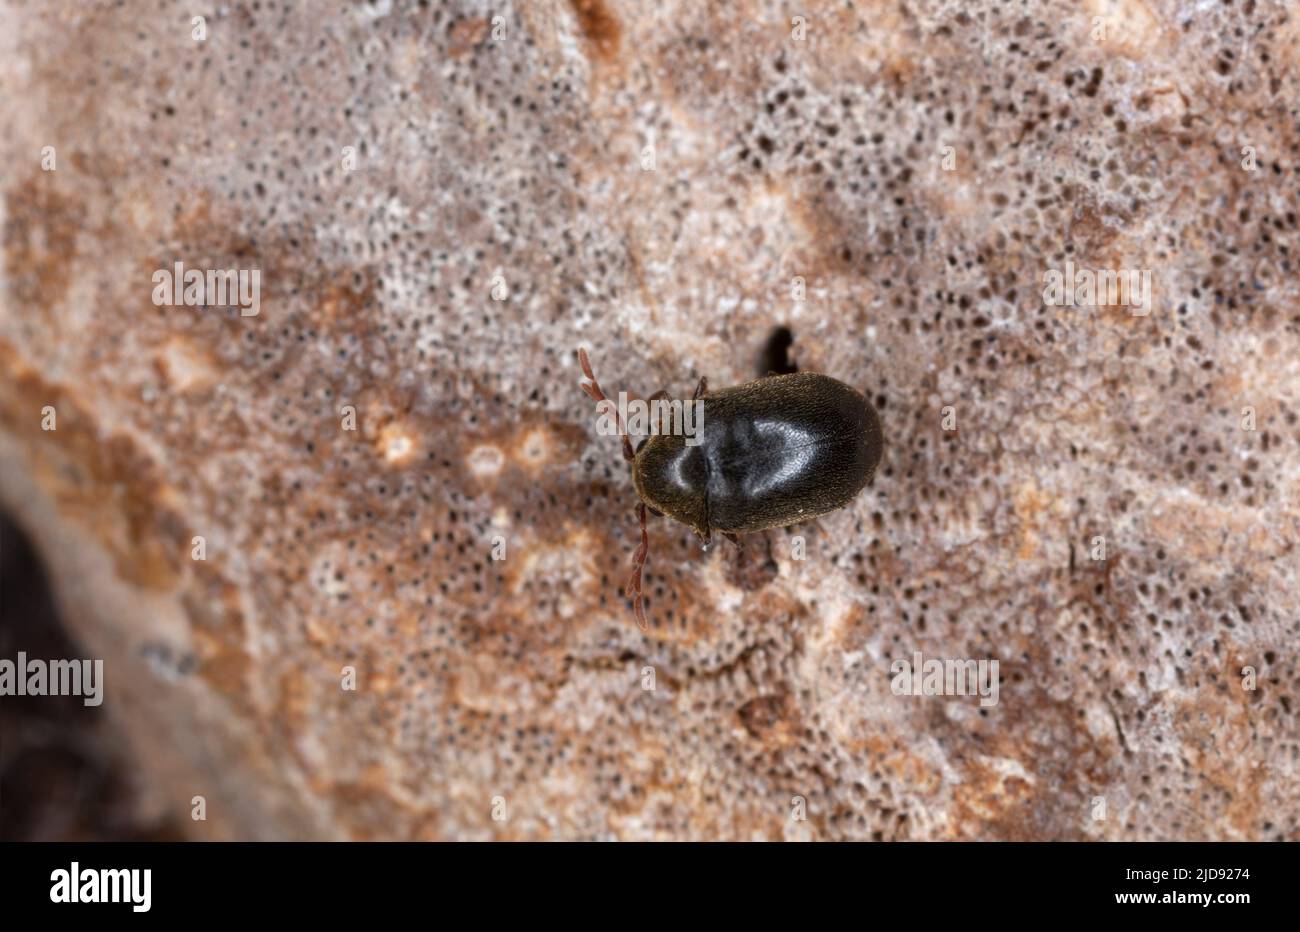 Dorcatoma dresdensis on polypore, macro photo Stock Photo